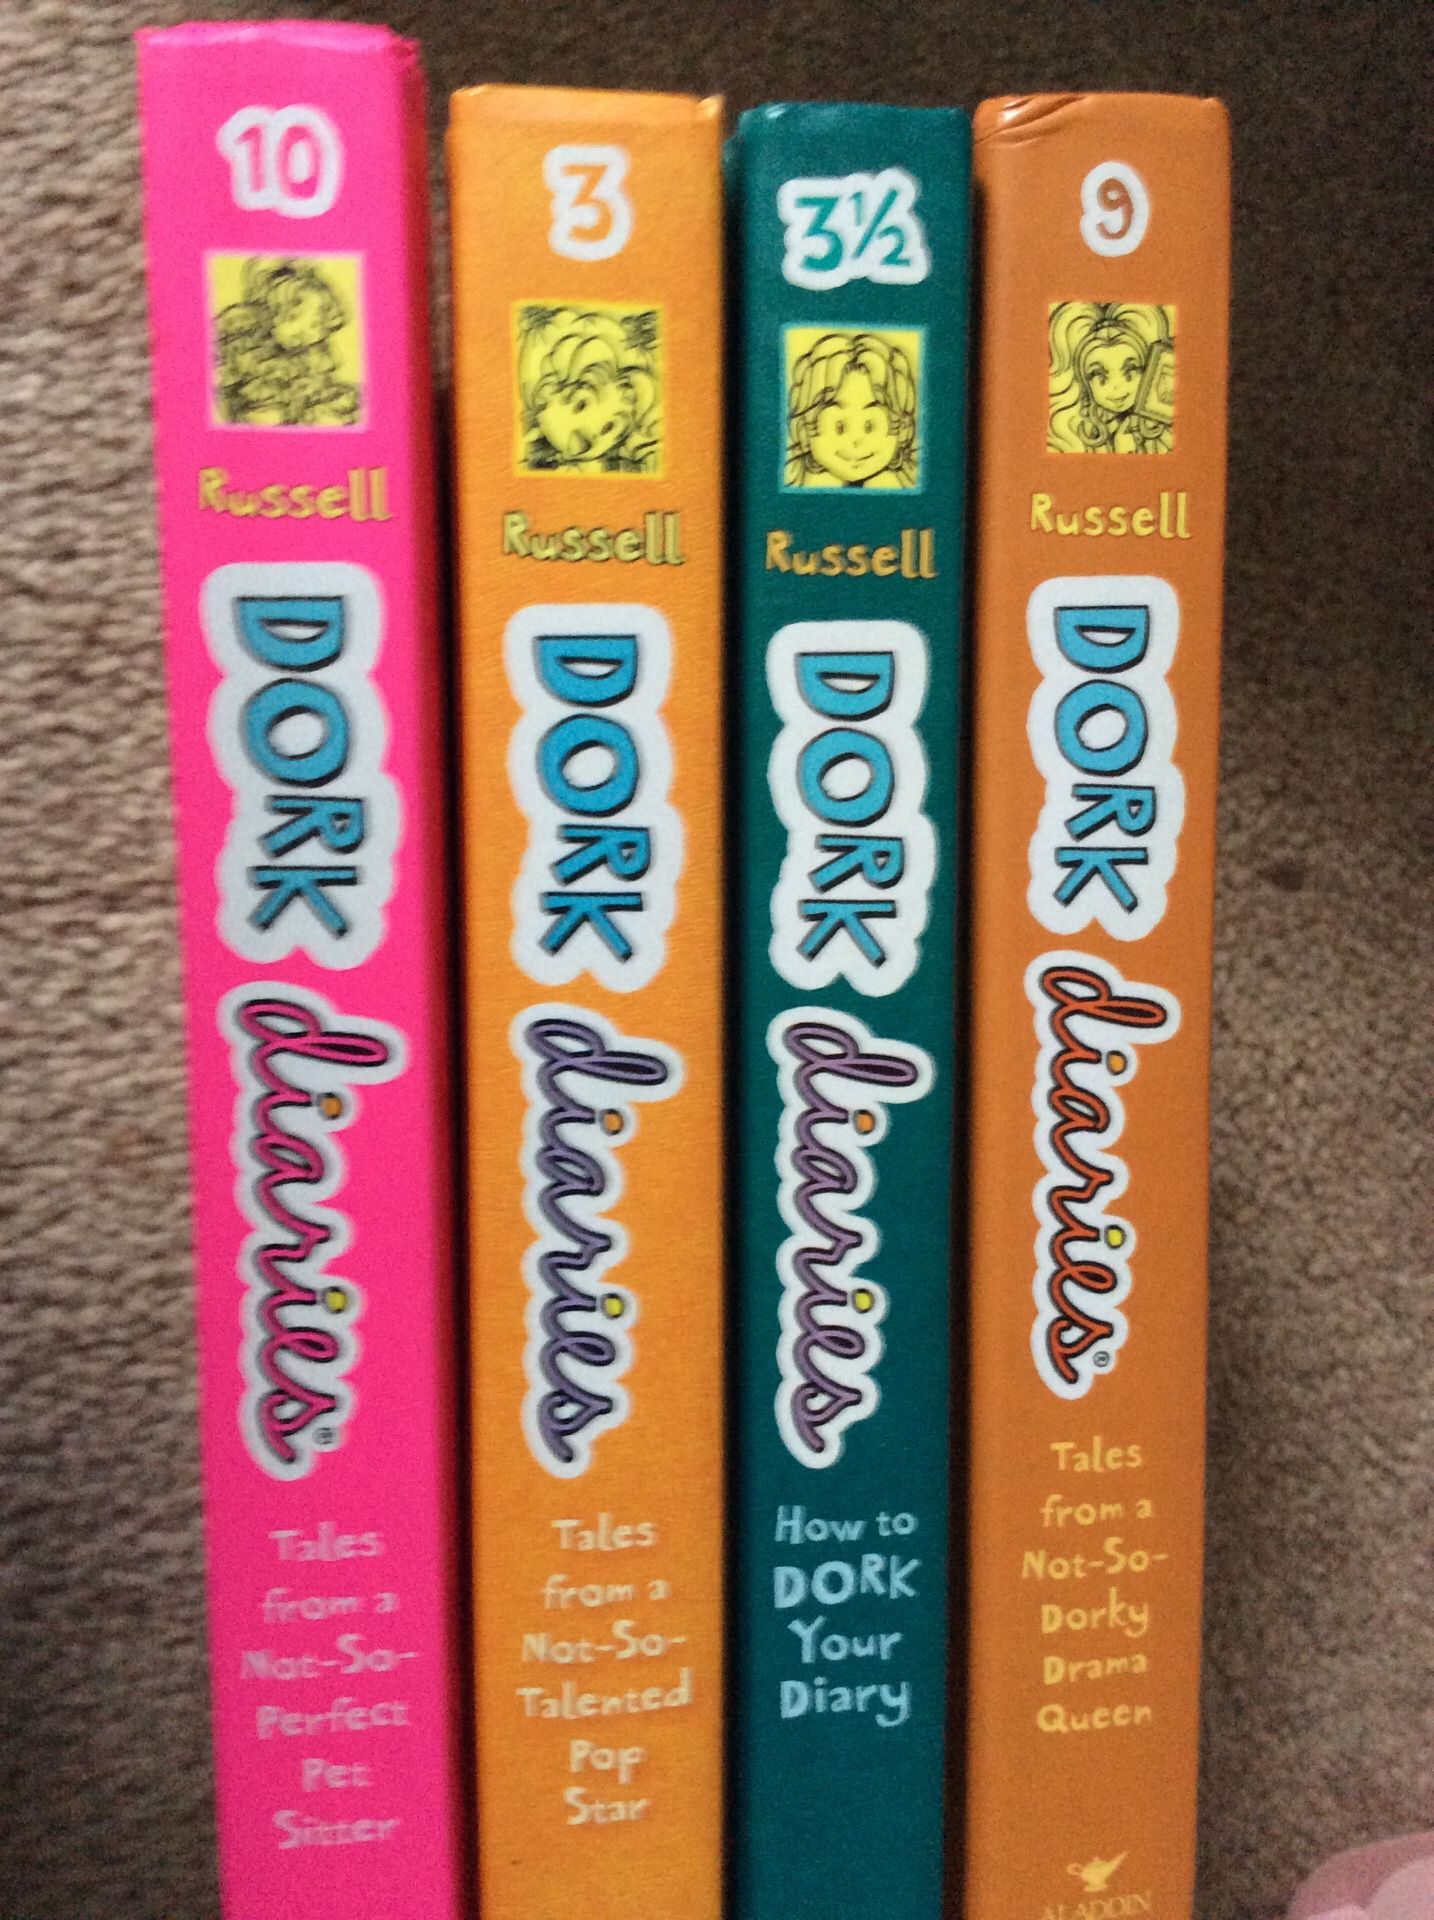 Set of 4 Dork diaries books